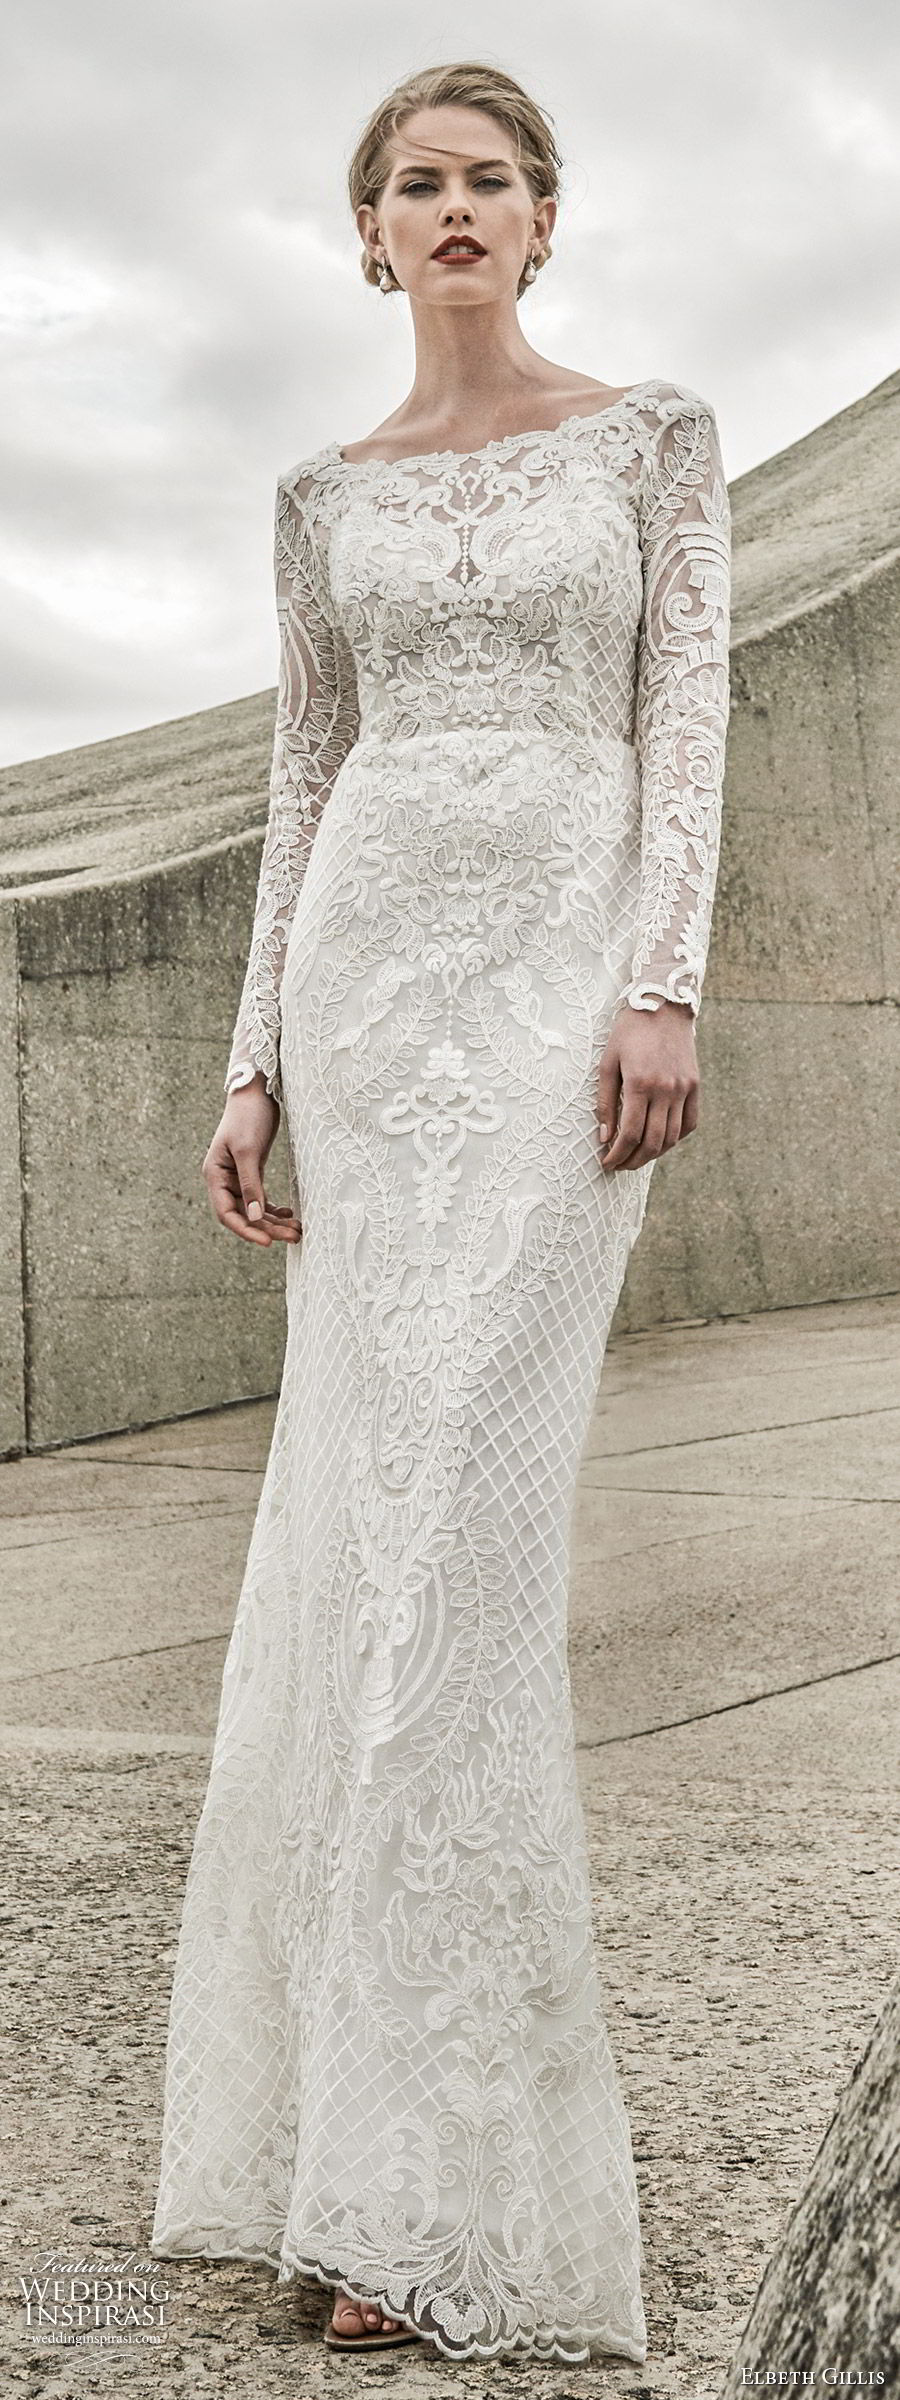 elbeth gillis 2020 bridal long sleeves bateau neckline fully embellished lace sheath wedding dress (1) romantic elegant sweep train v back lv